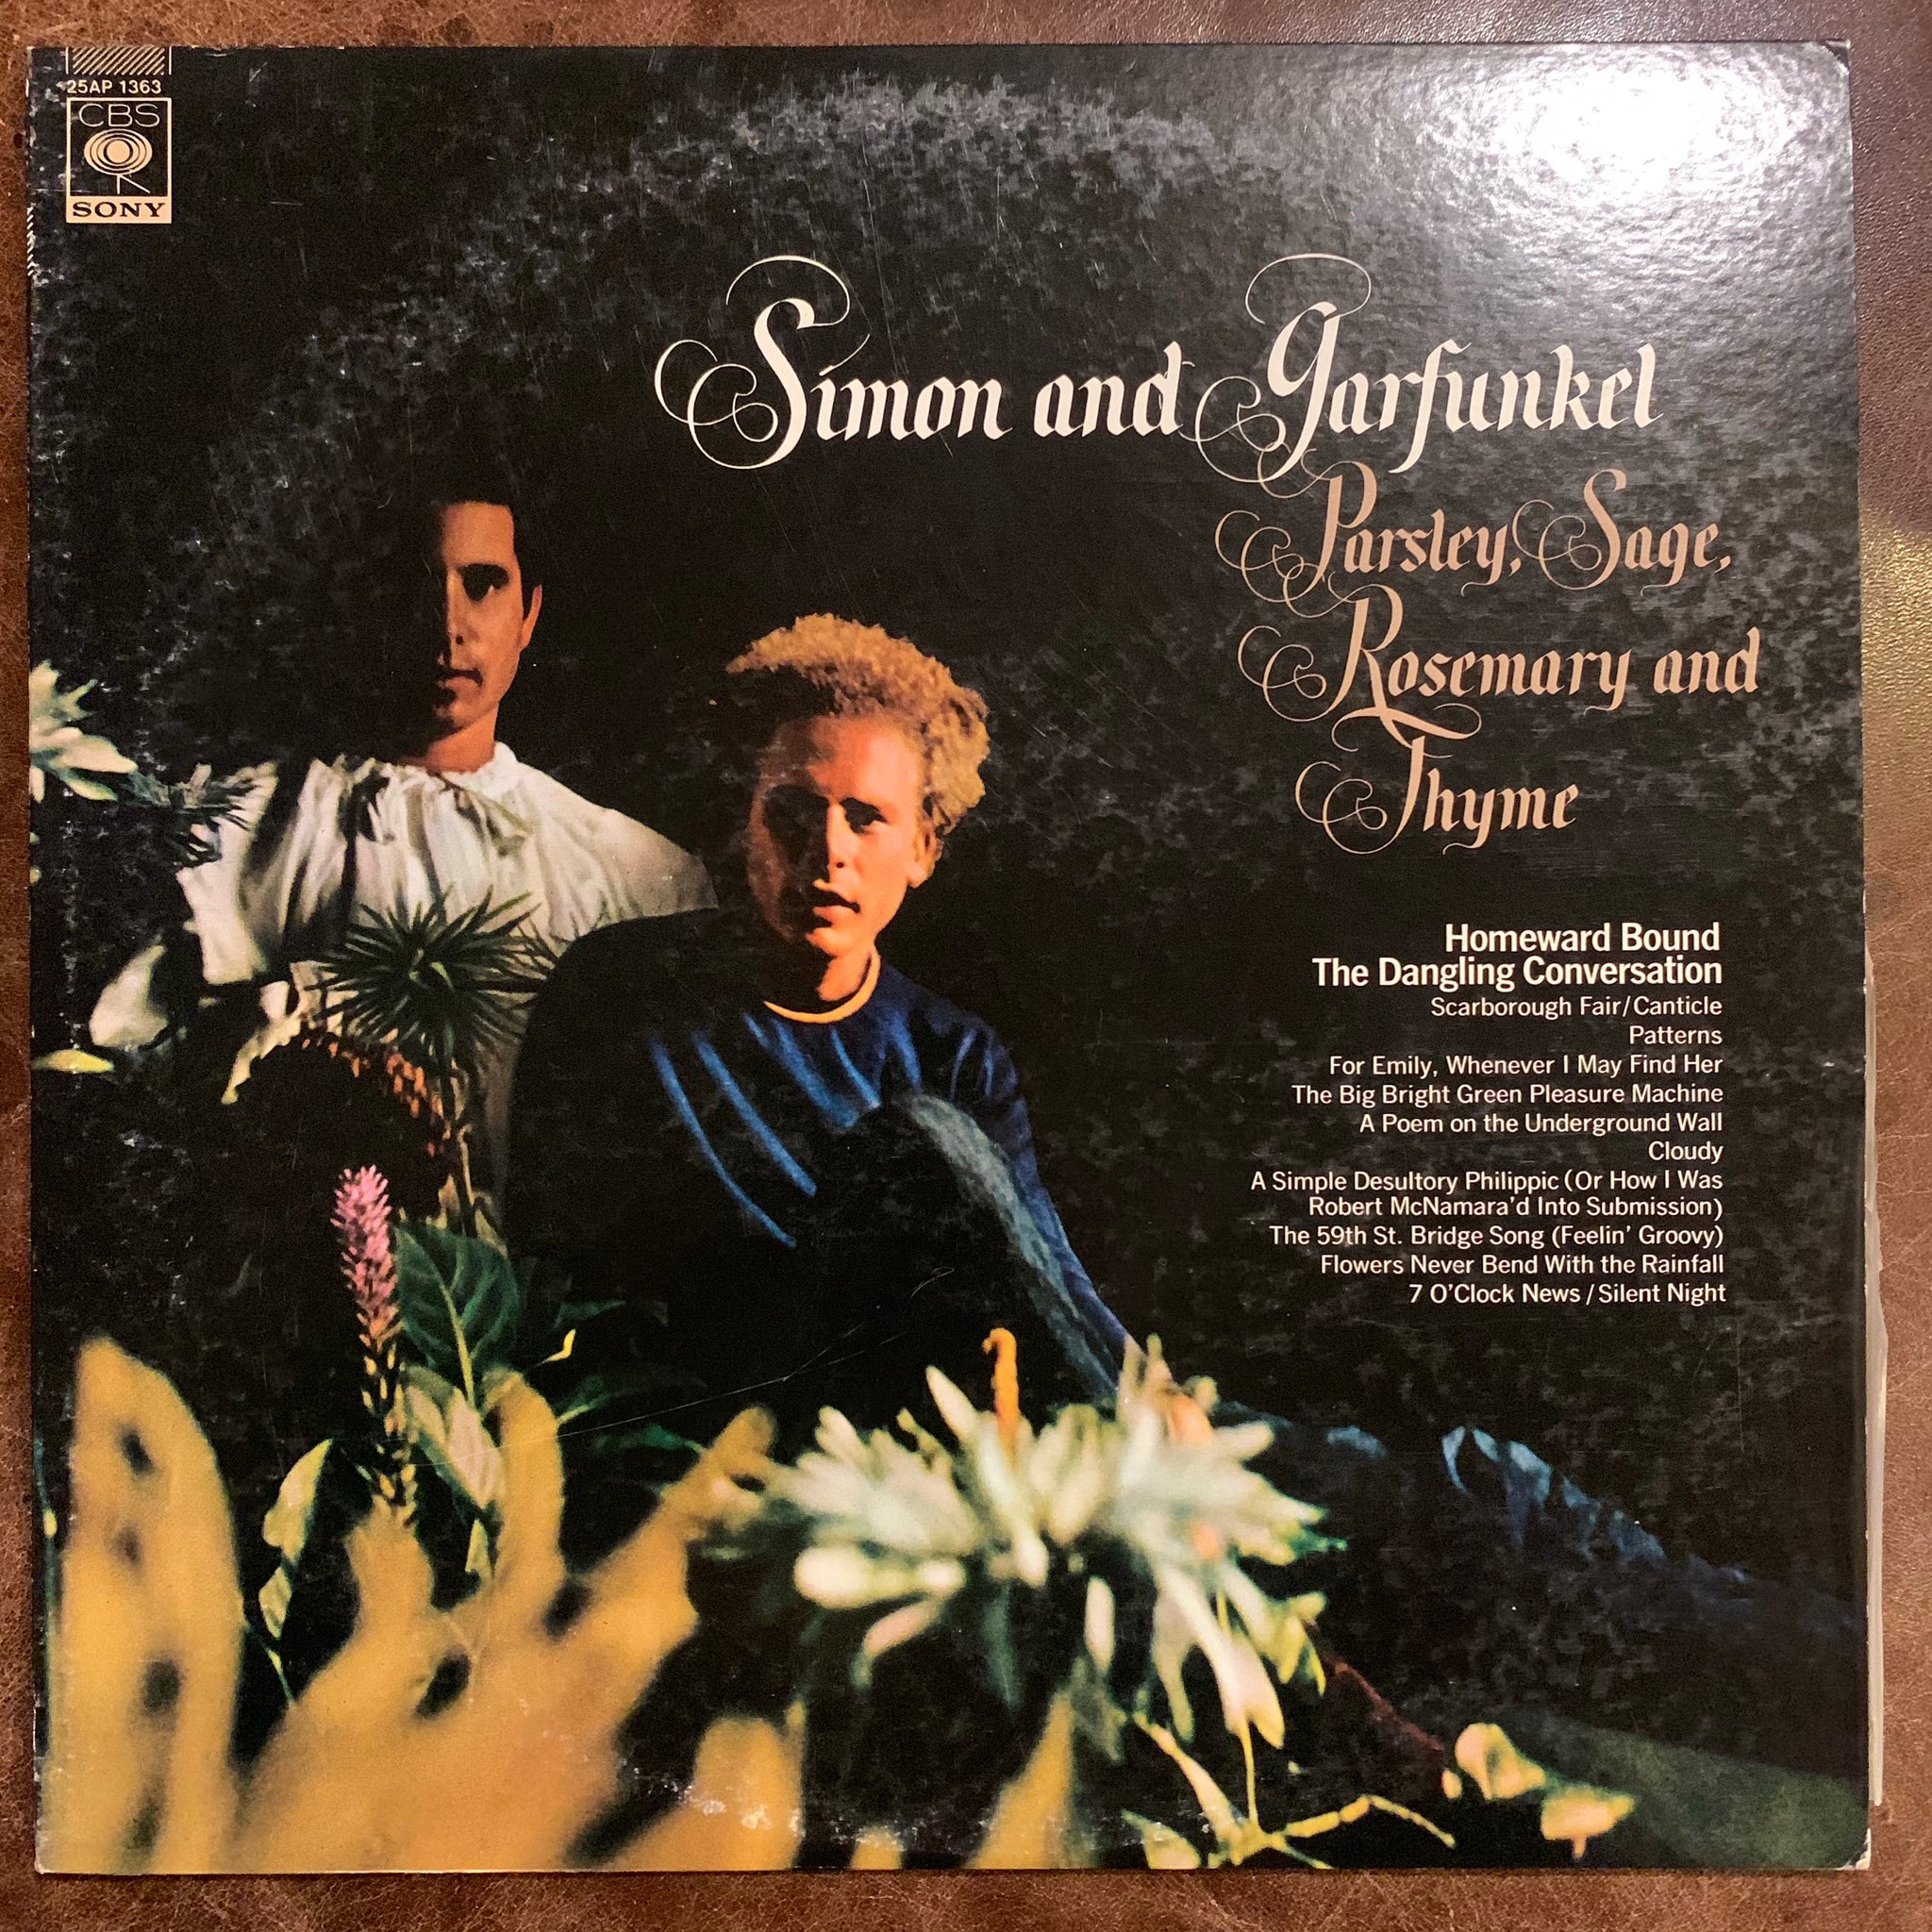 Simon and Garfunkel - Parsley, Sage, Rosemary, and Thyme